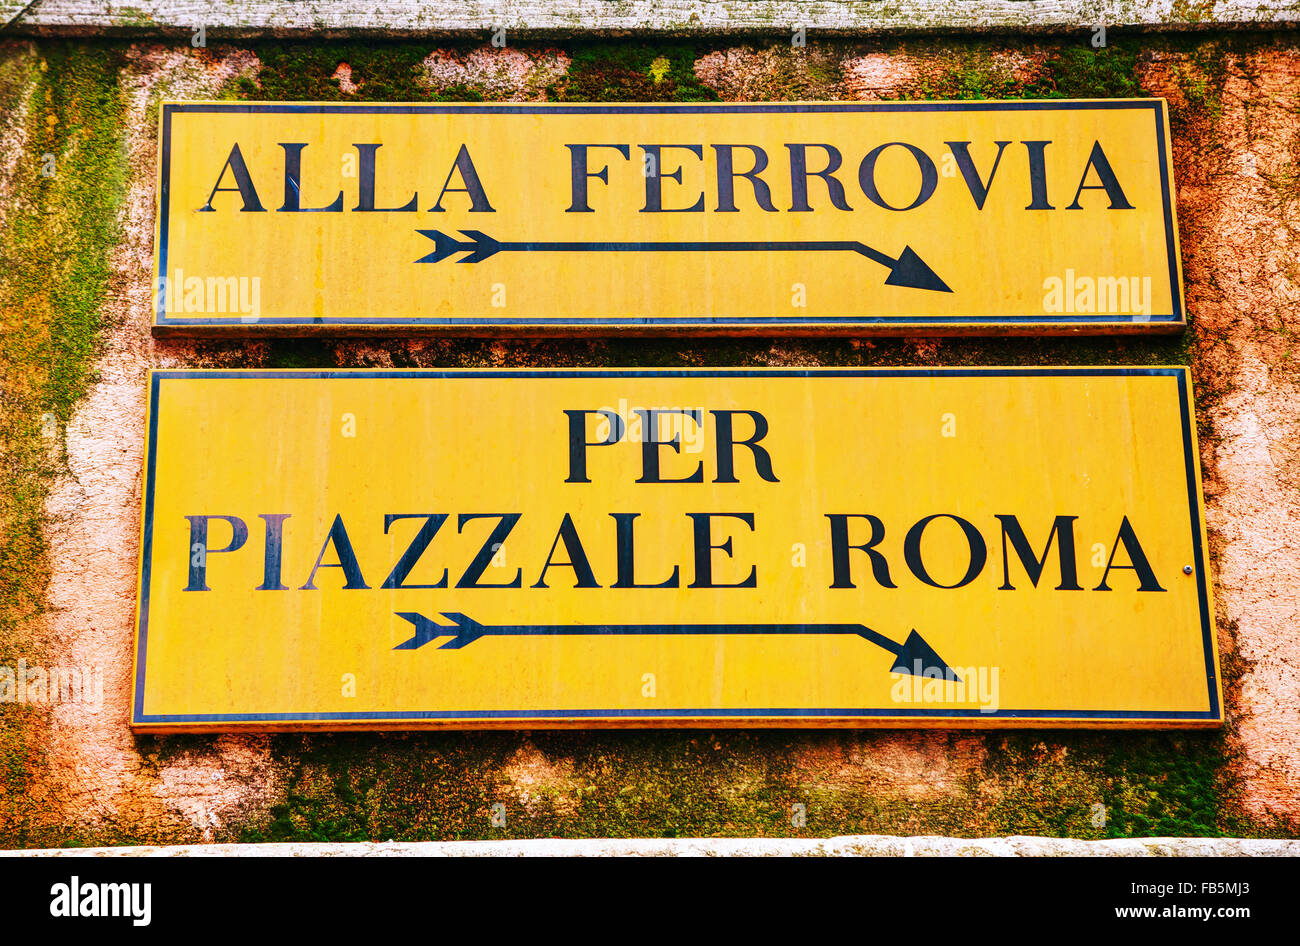 Alla Ferrovia and Piazzale Roma direction sign in Venice, Italy Stock Photo